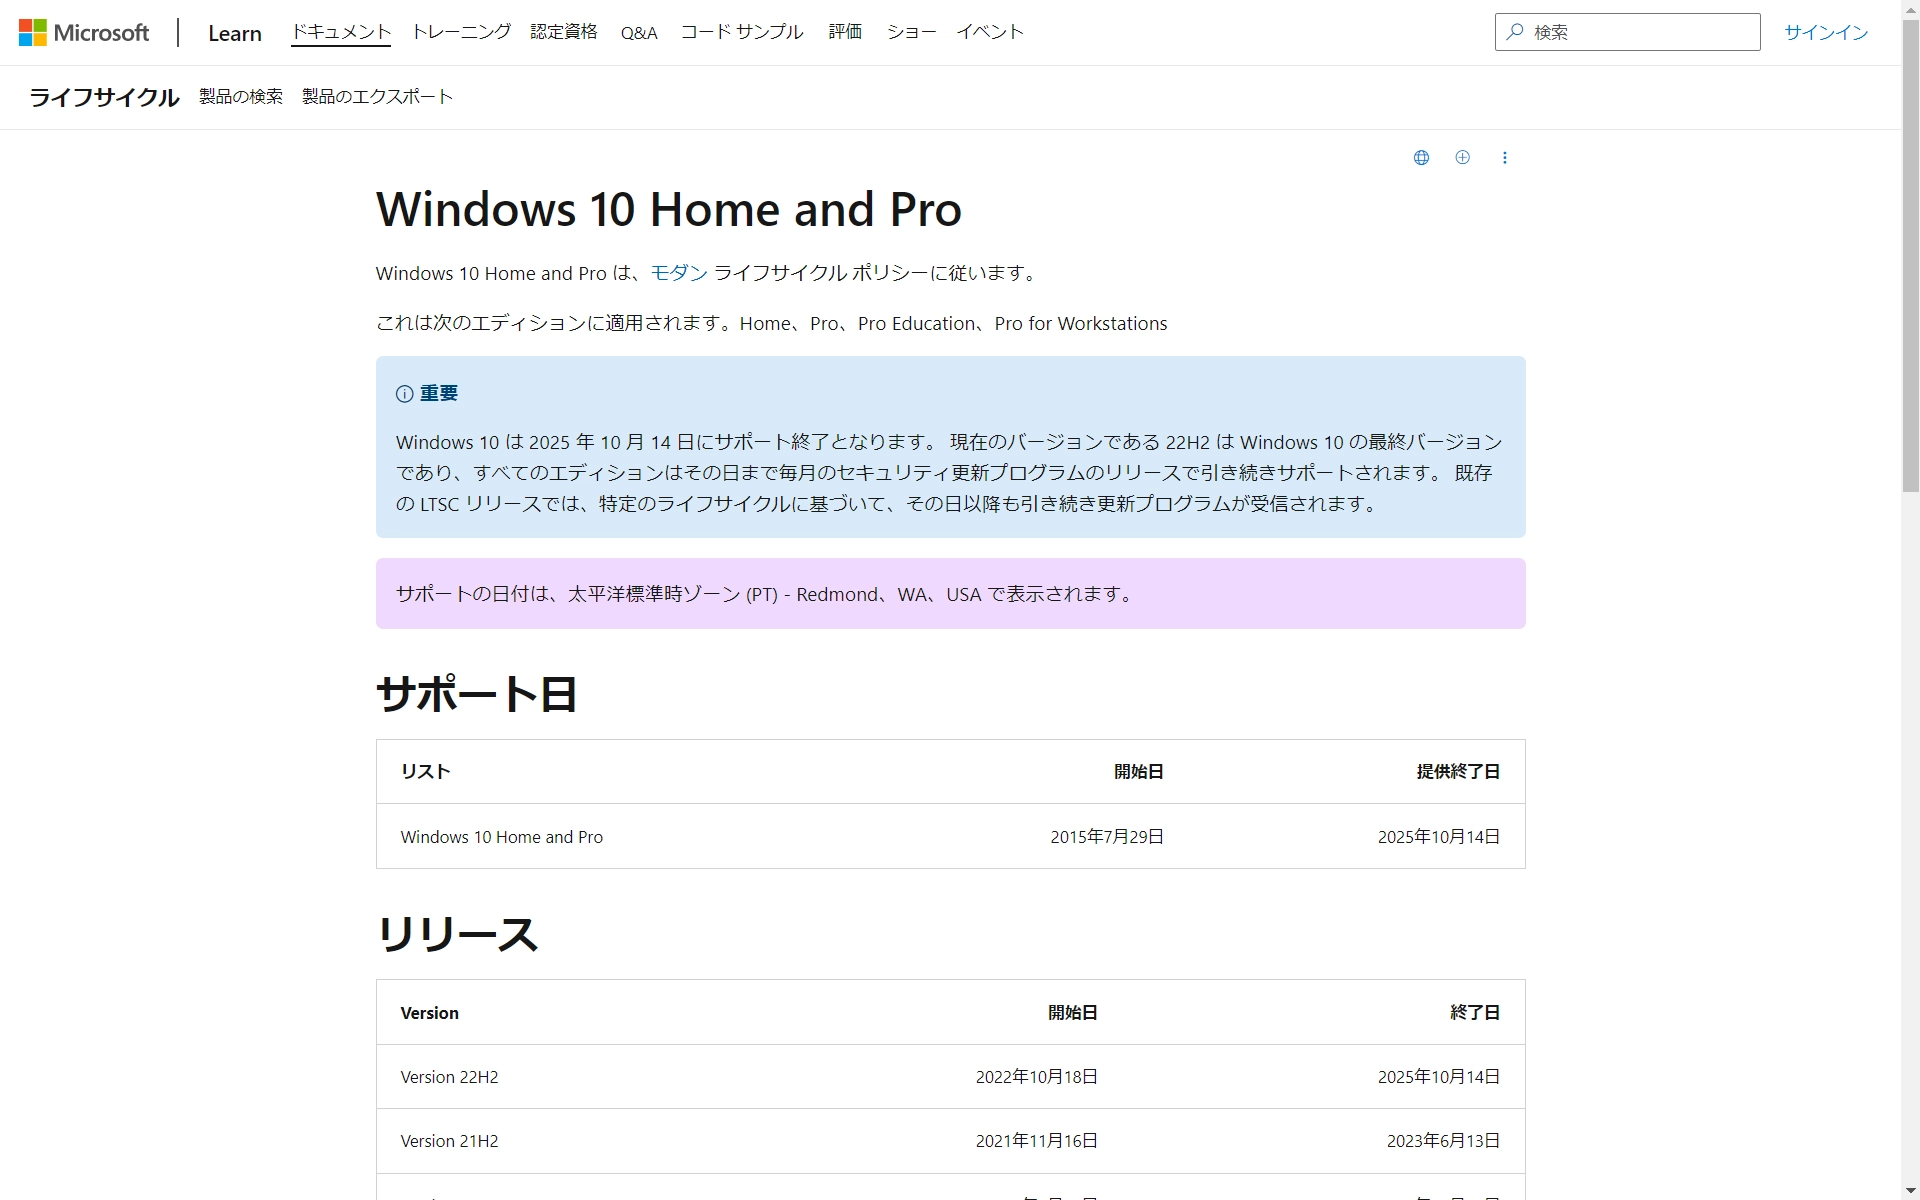 Microsoft公式「Windows 10 Home and Pro」から引用